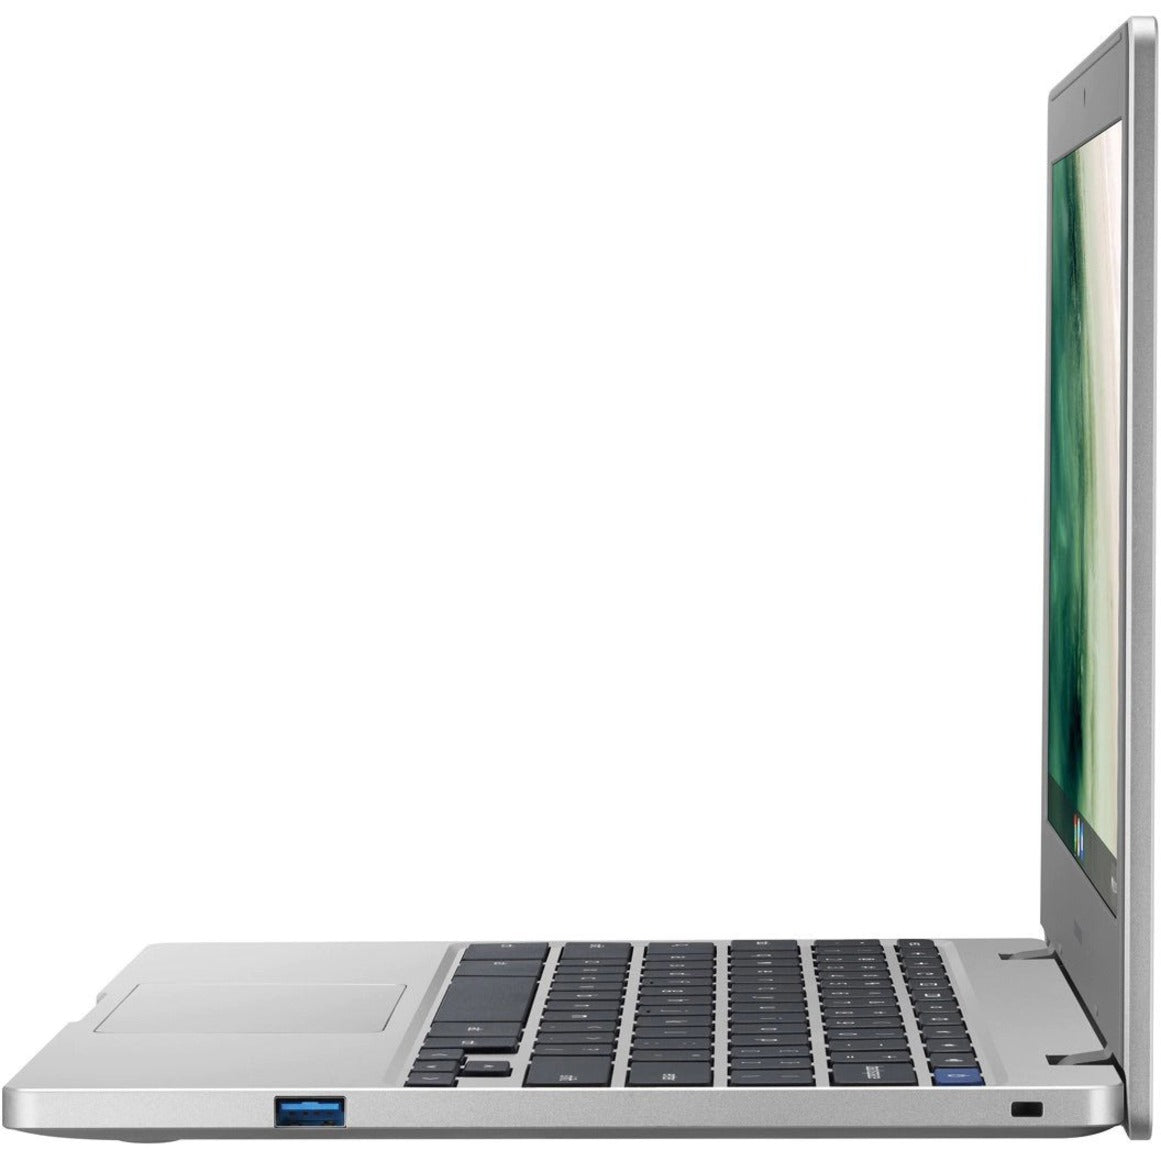 Samsung Chromebook 4 (2021) Celeron 11.6" 4GB 32GB SSD Laptop - XE310XBA-KC1US New